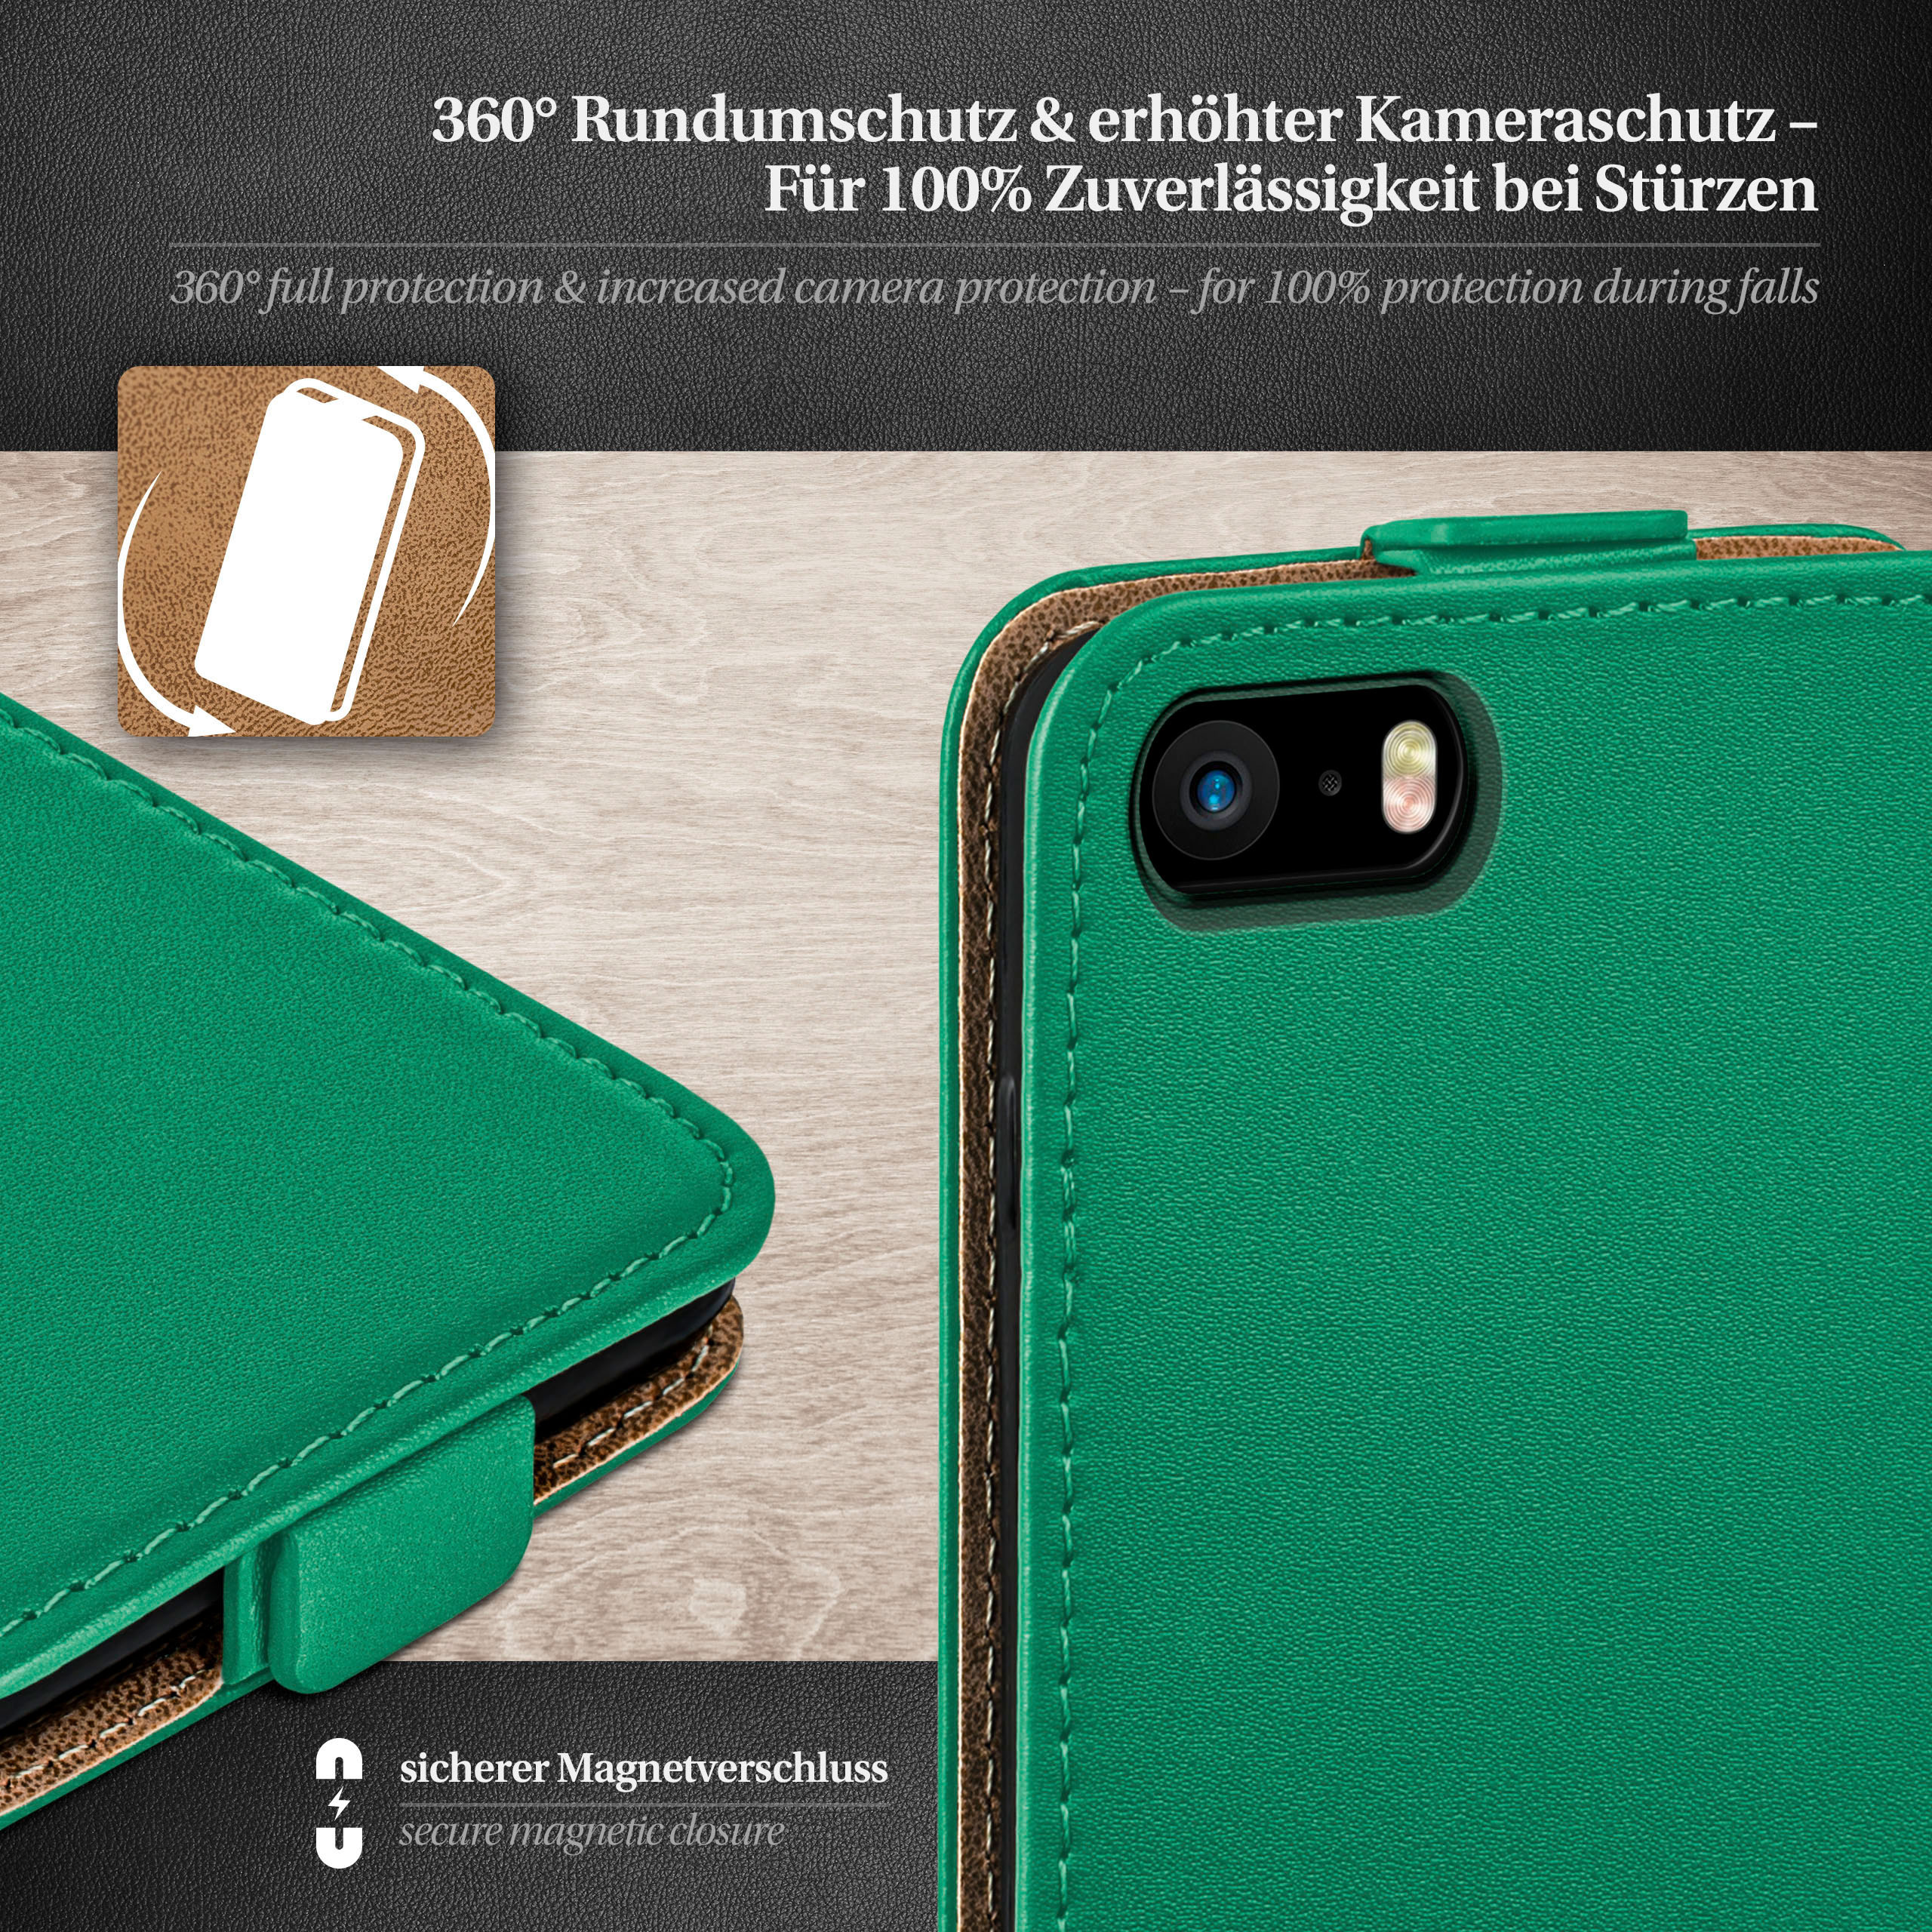 Flip (2016), 5s 5 / Apple, Case, Flip Emerald-Green MOEX Cover, SE iPhone /